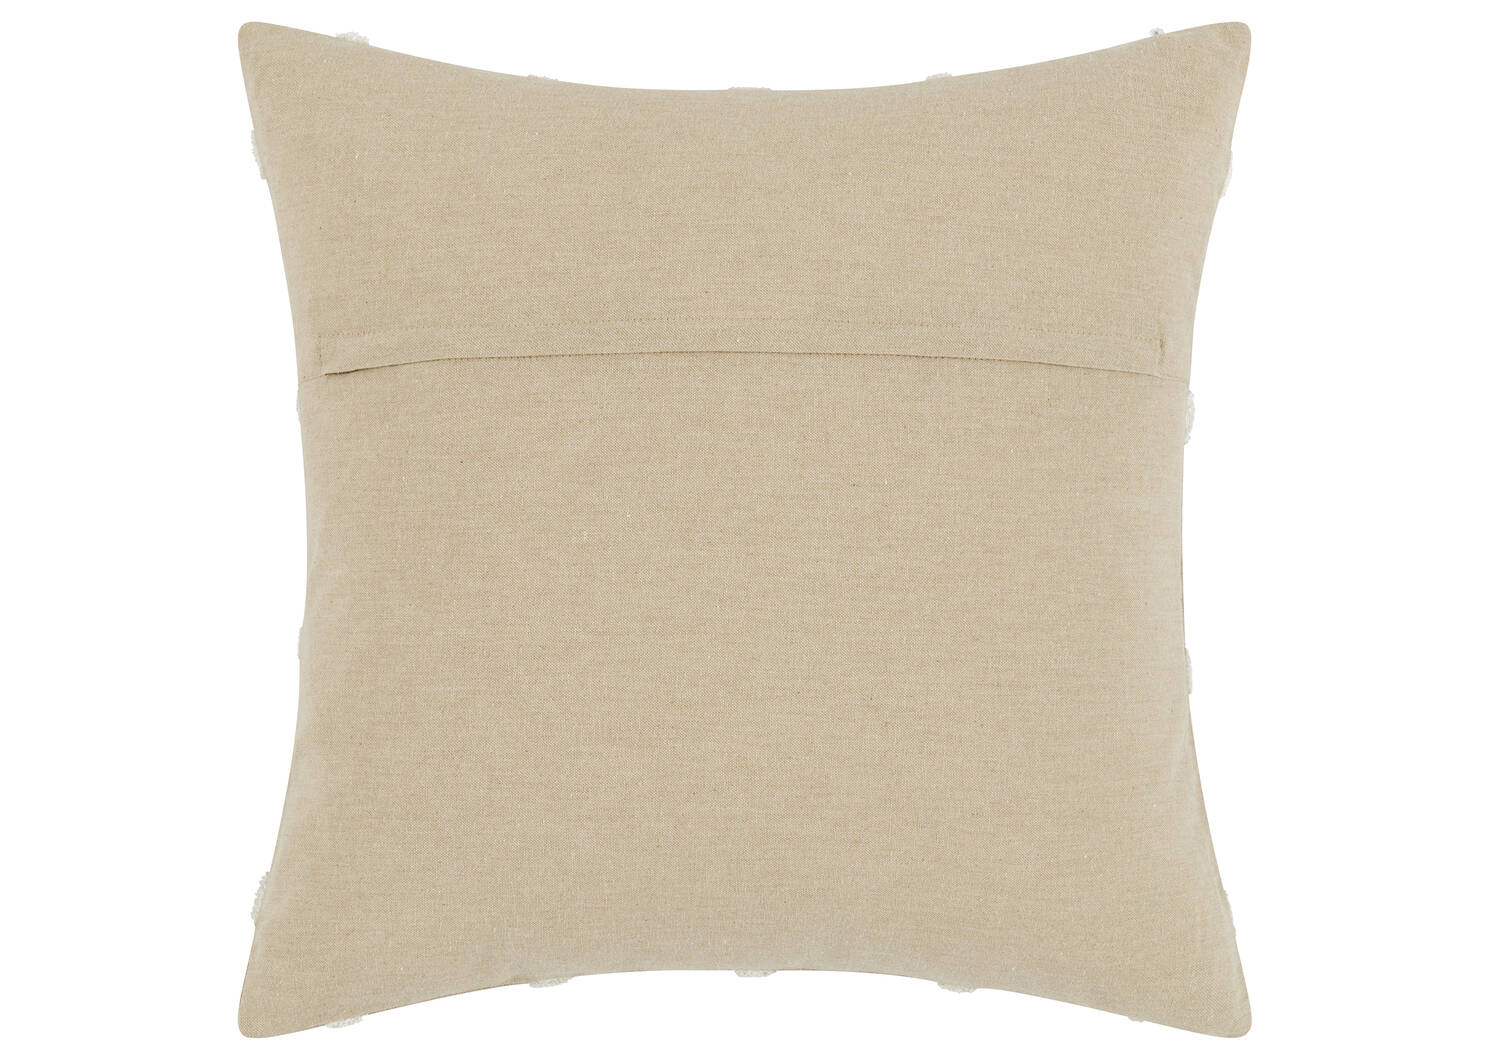 Bains Cotton Pillow 20x20 Sand/Ivory